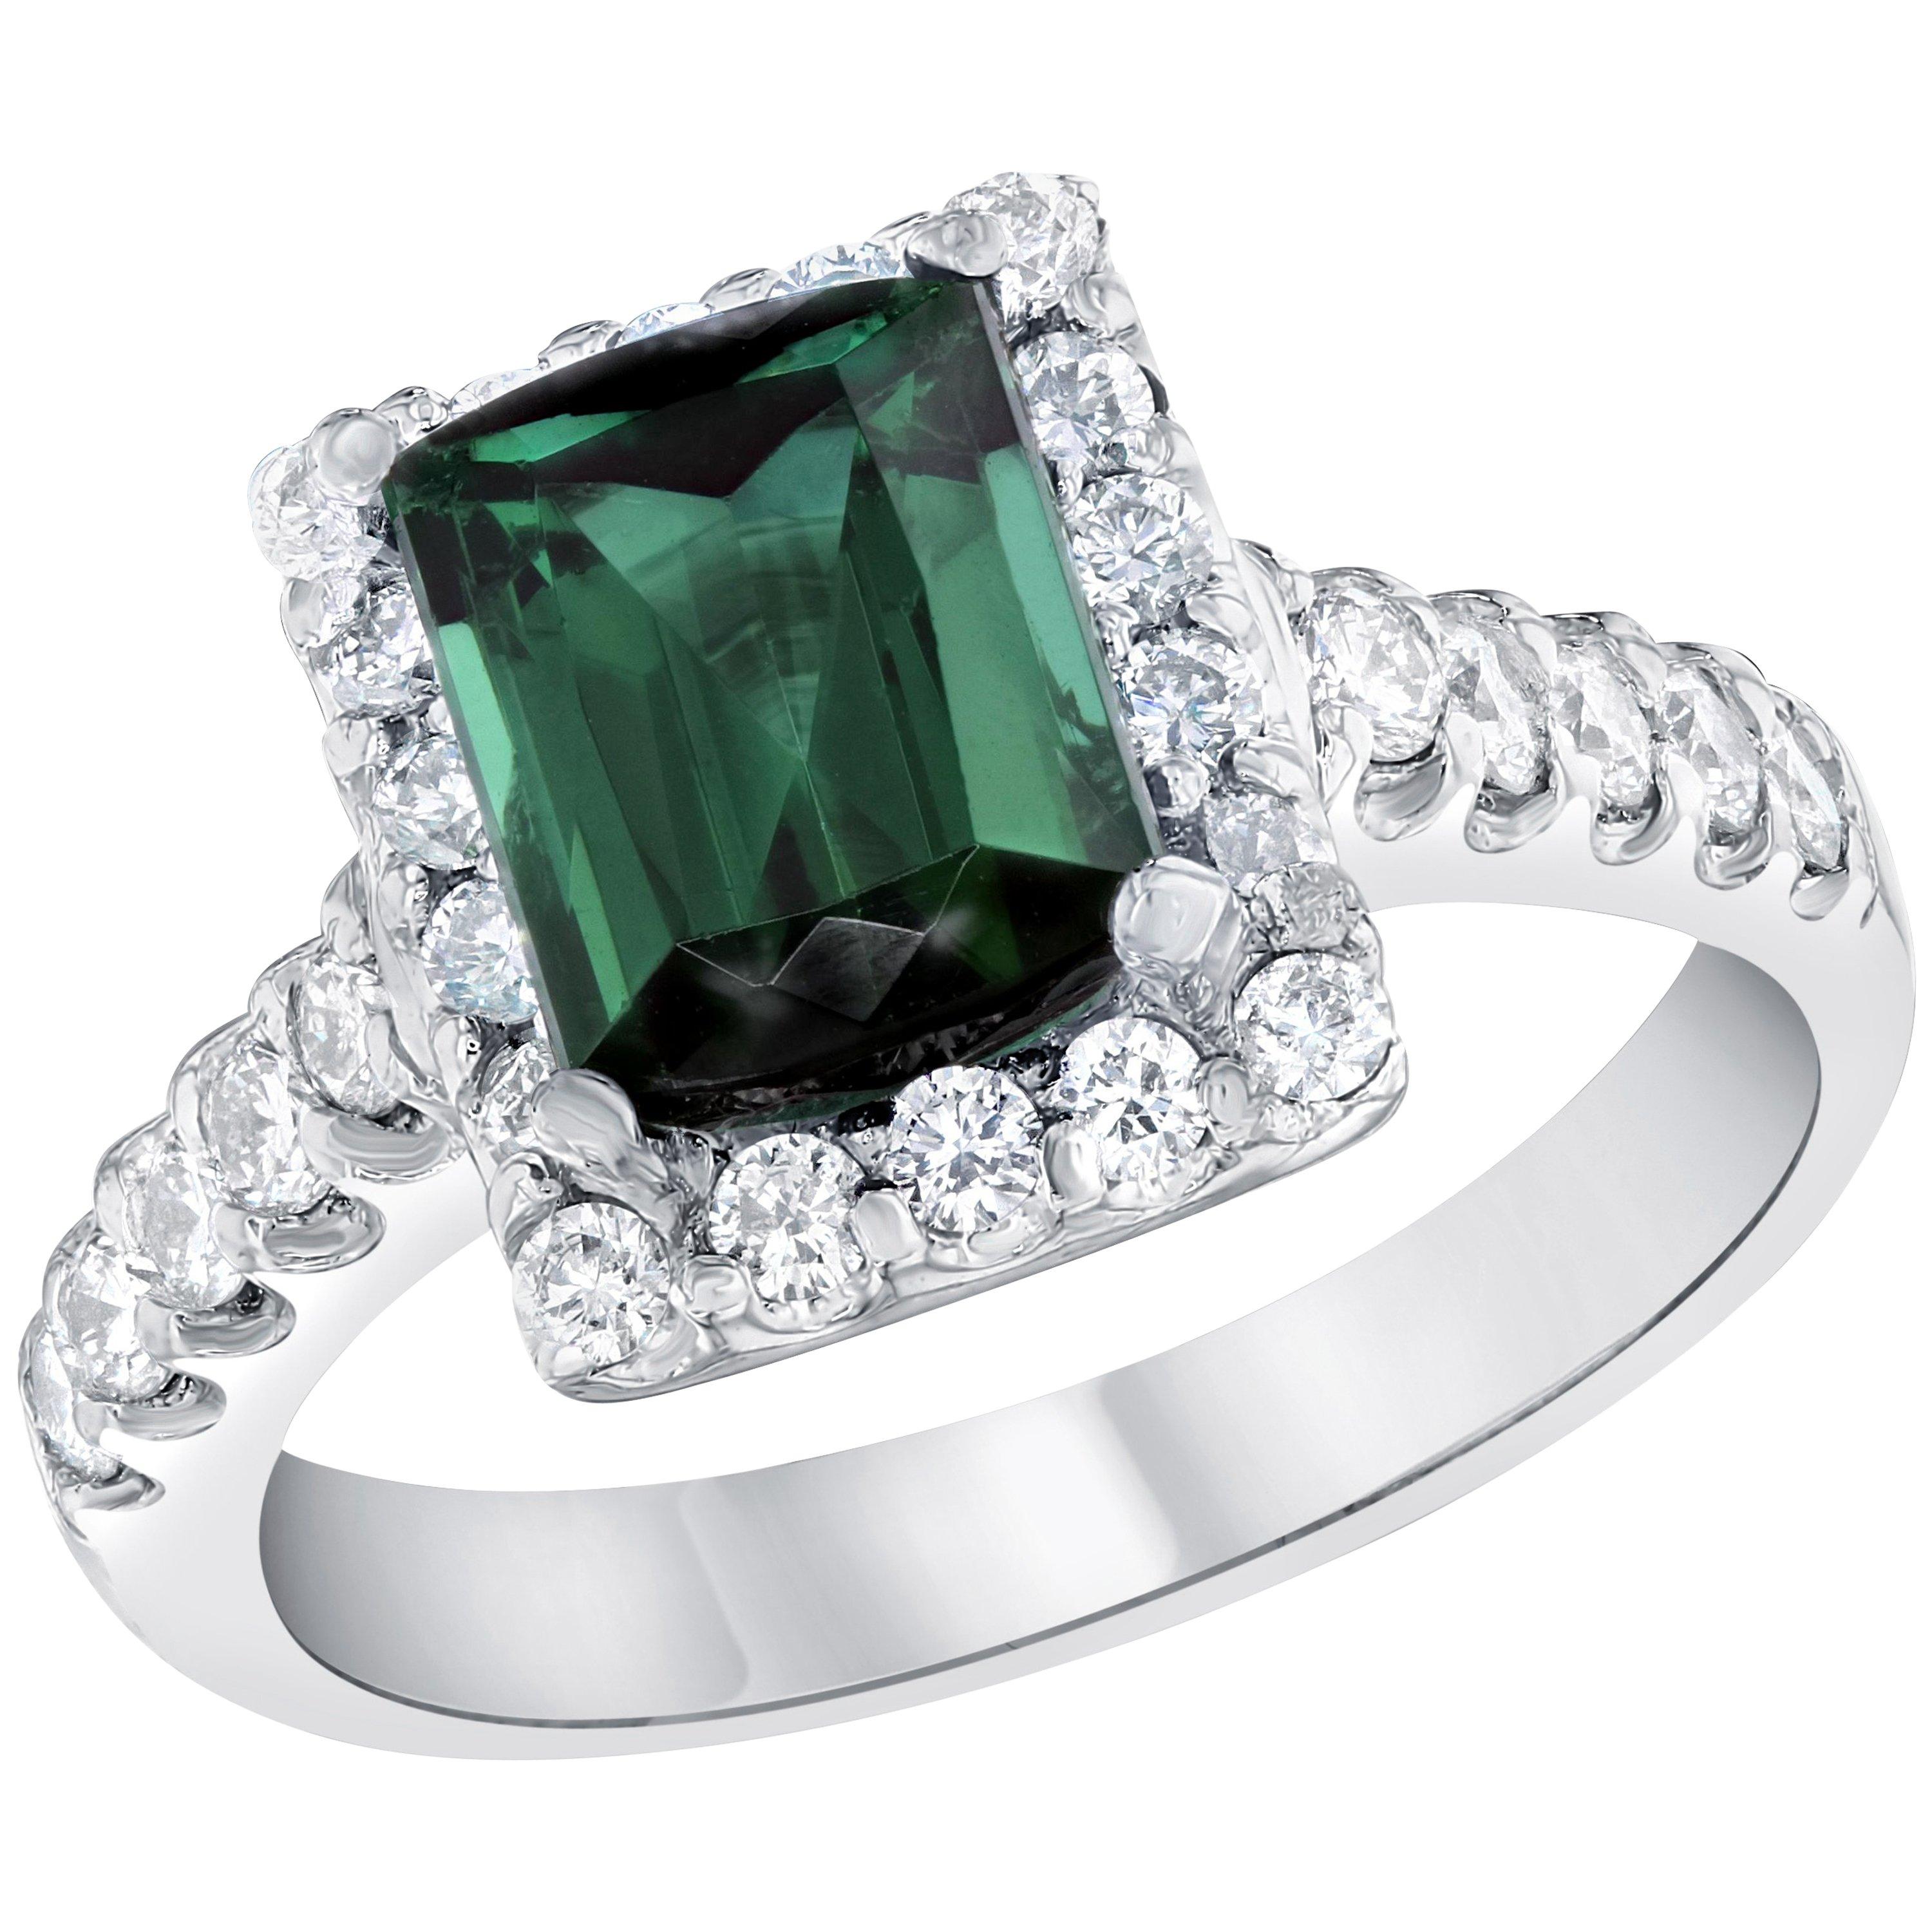 3.42 Carat Emerald Cut Green Tourmaline Diamond Cocktail Ring 